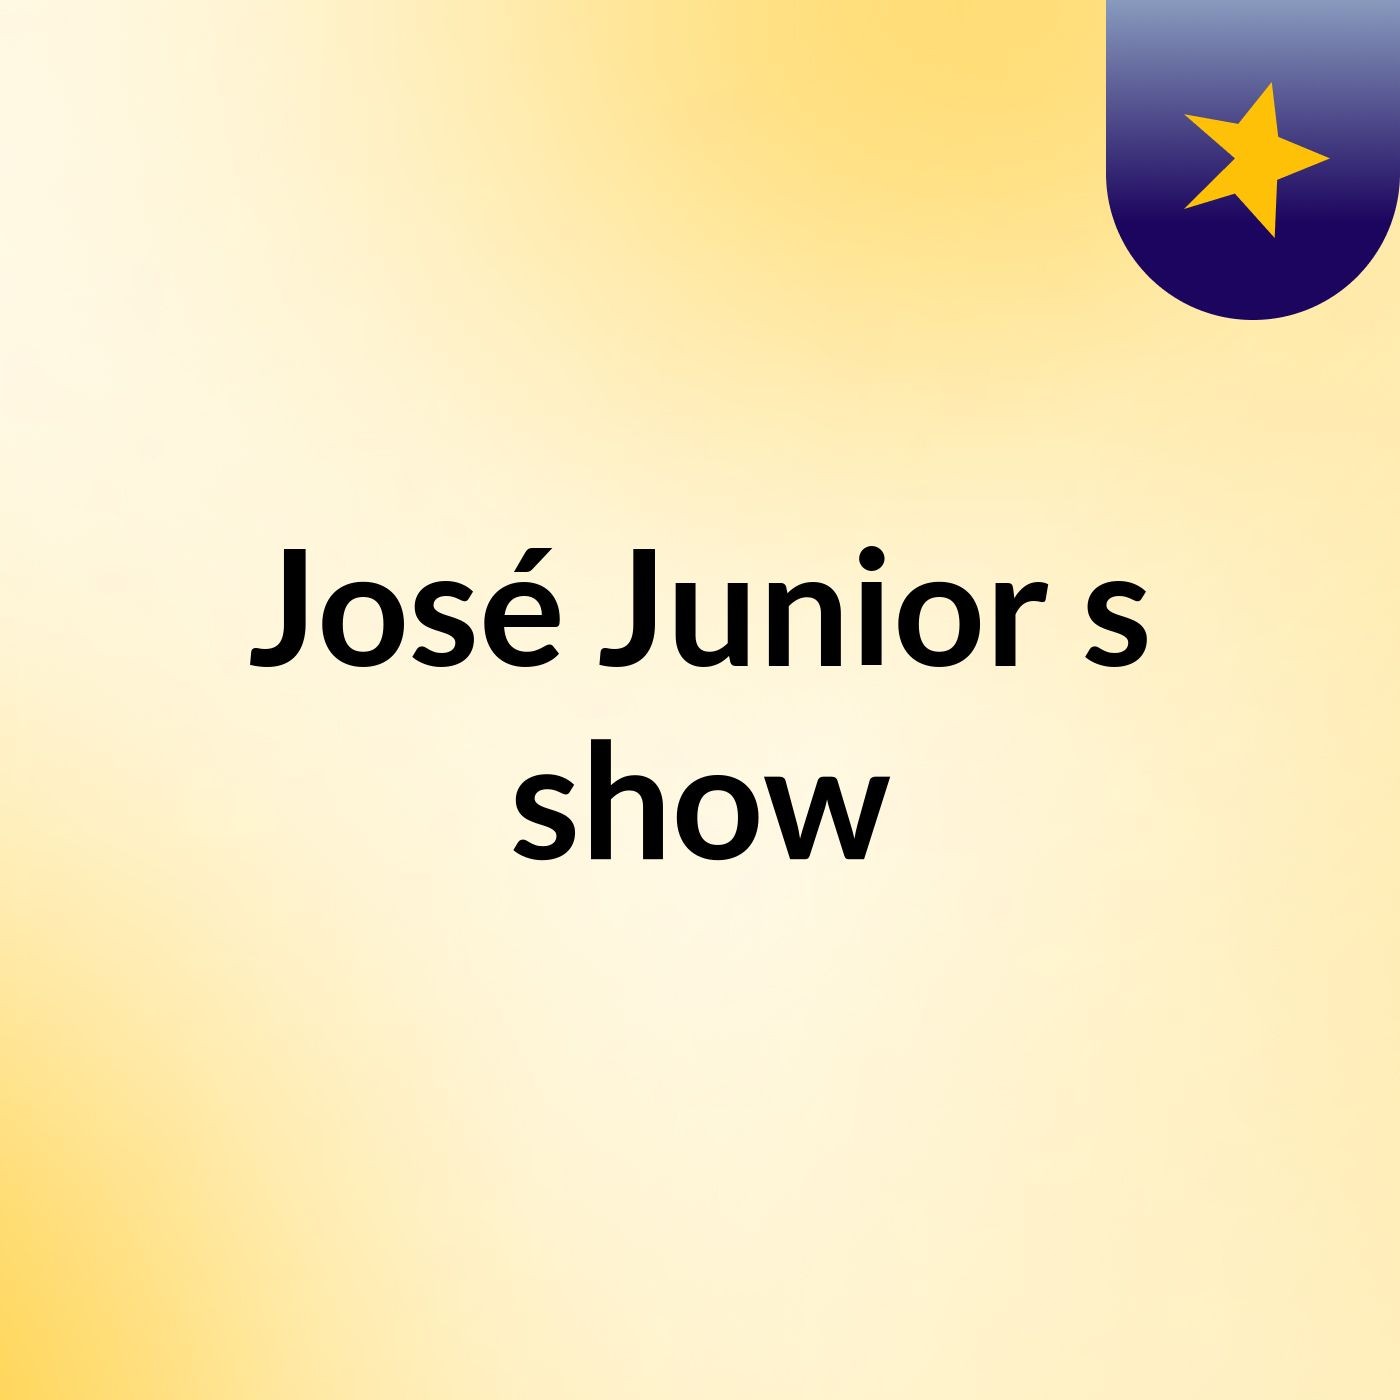 José Junior's show